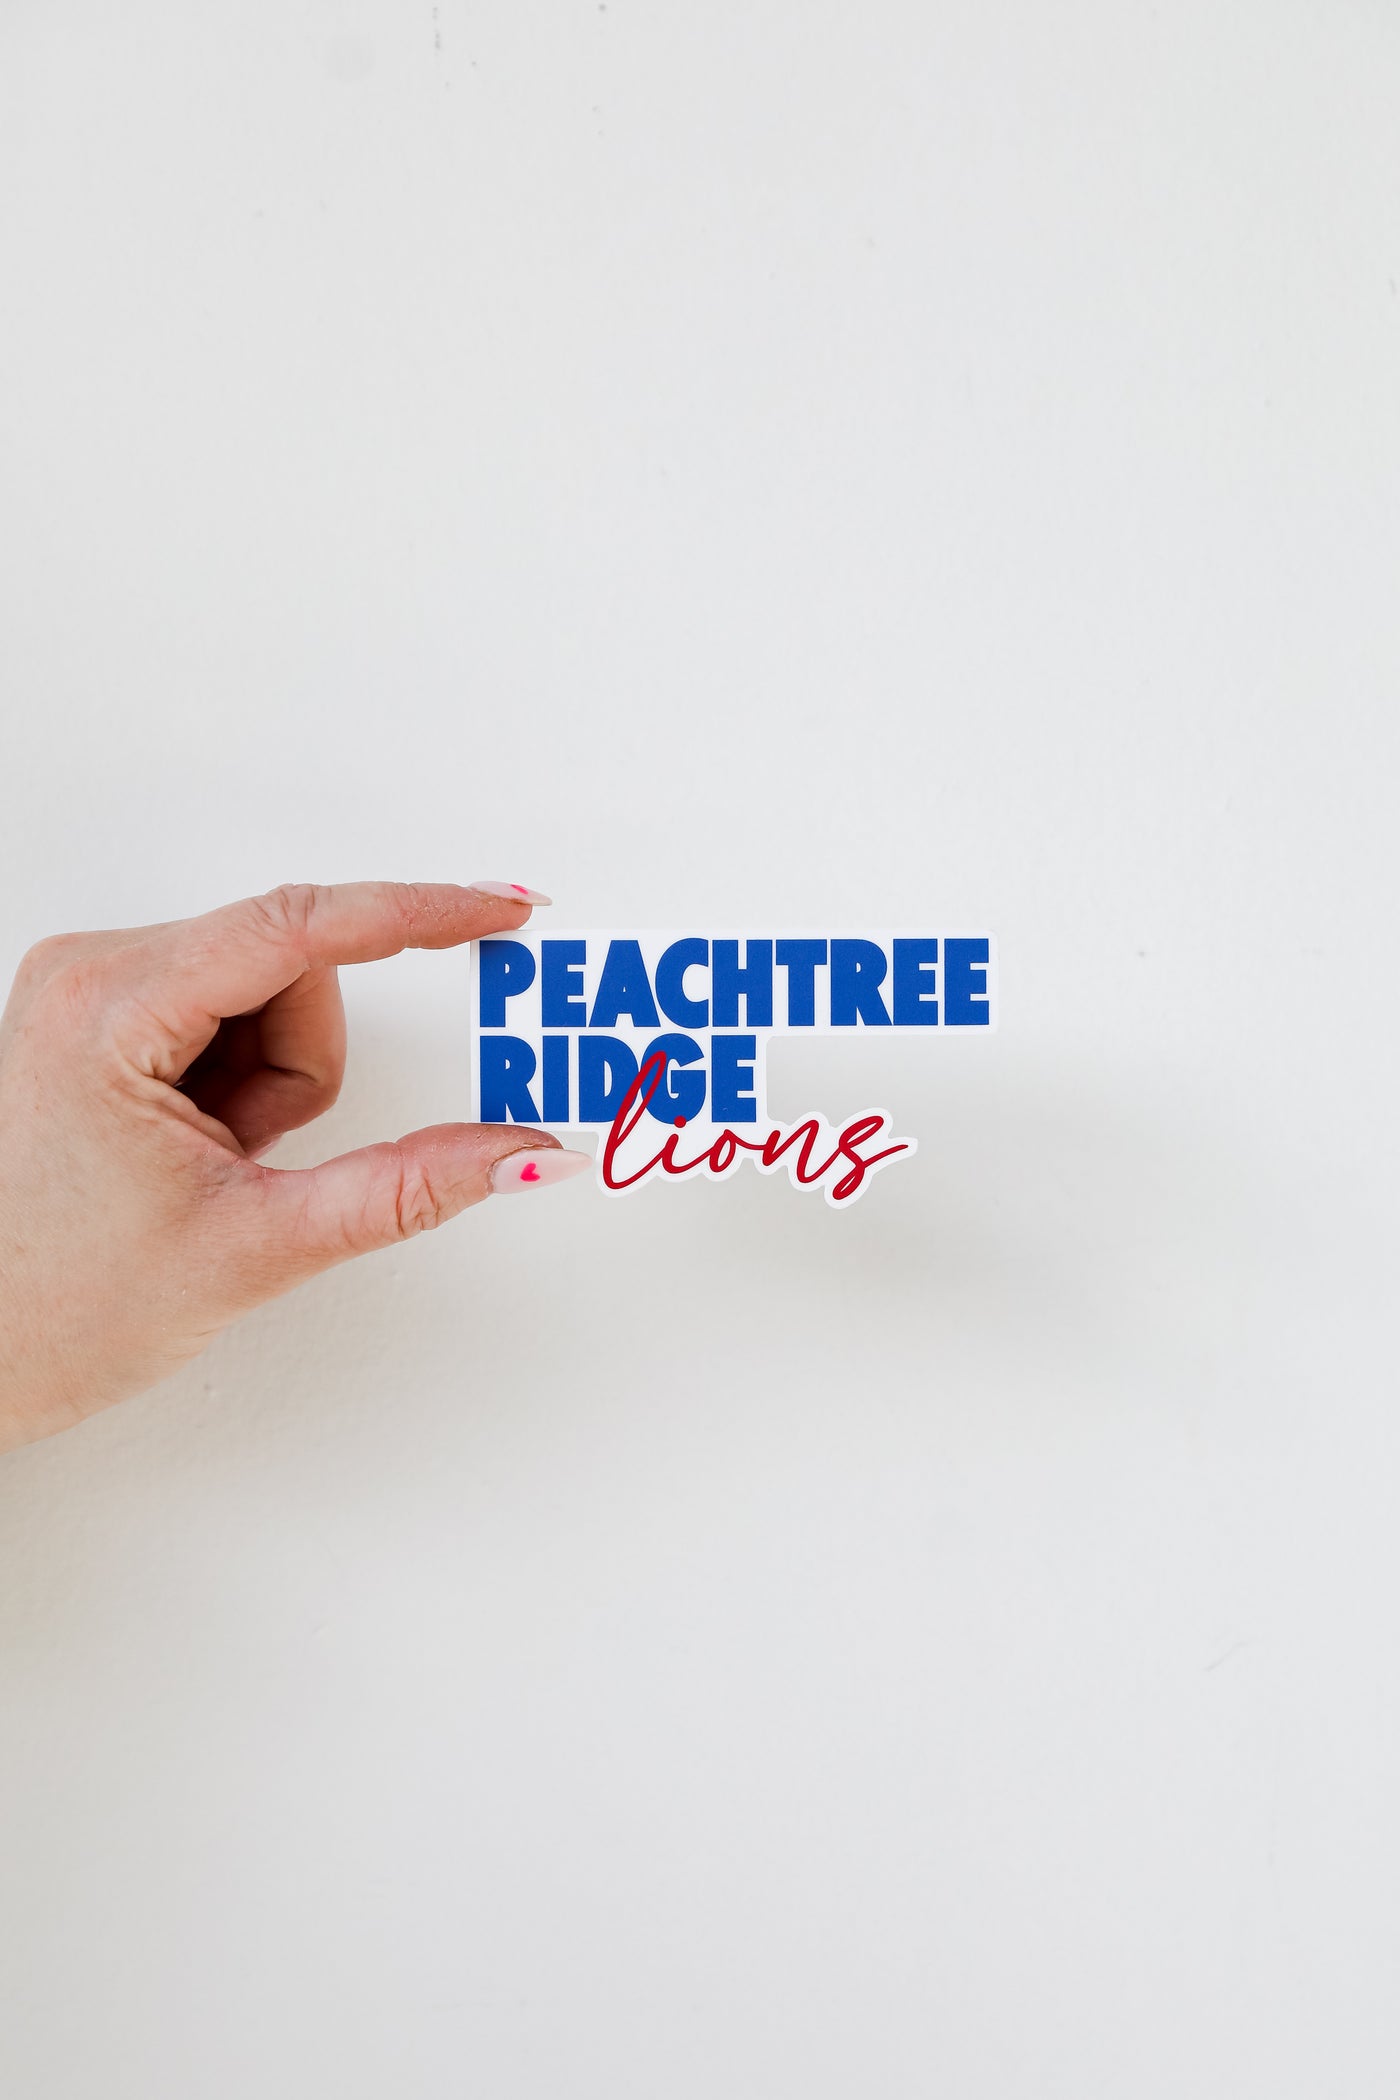 Peachtree Ridge Lions Sticker flat lay